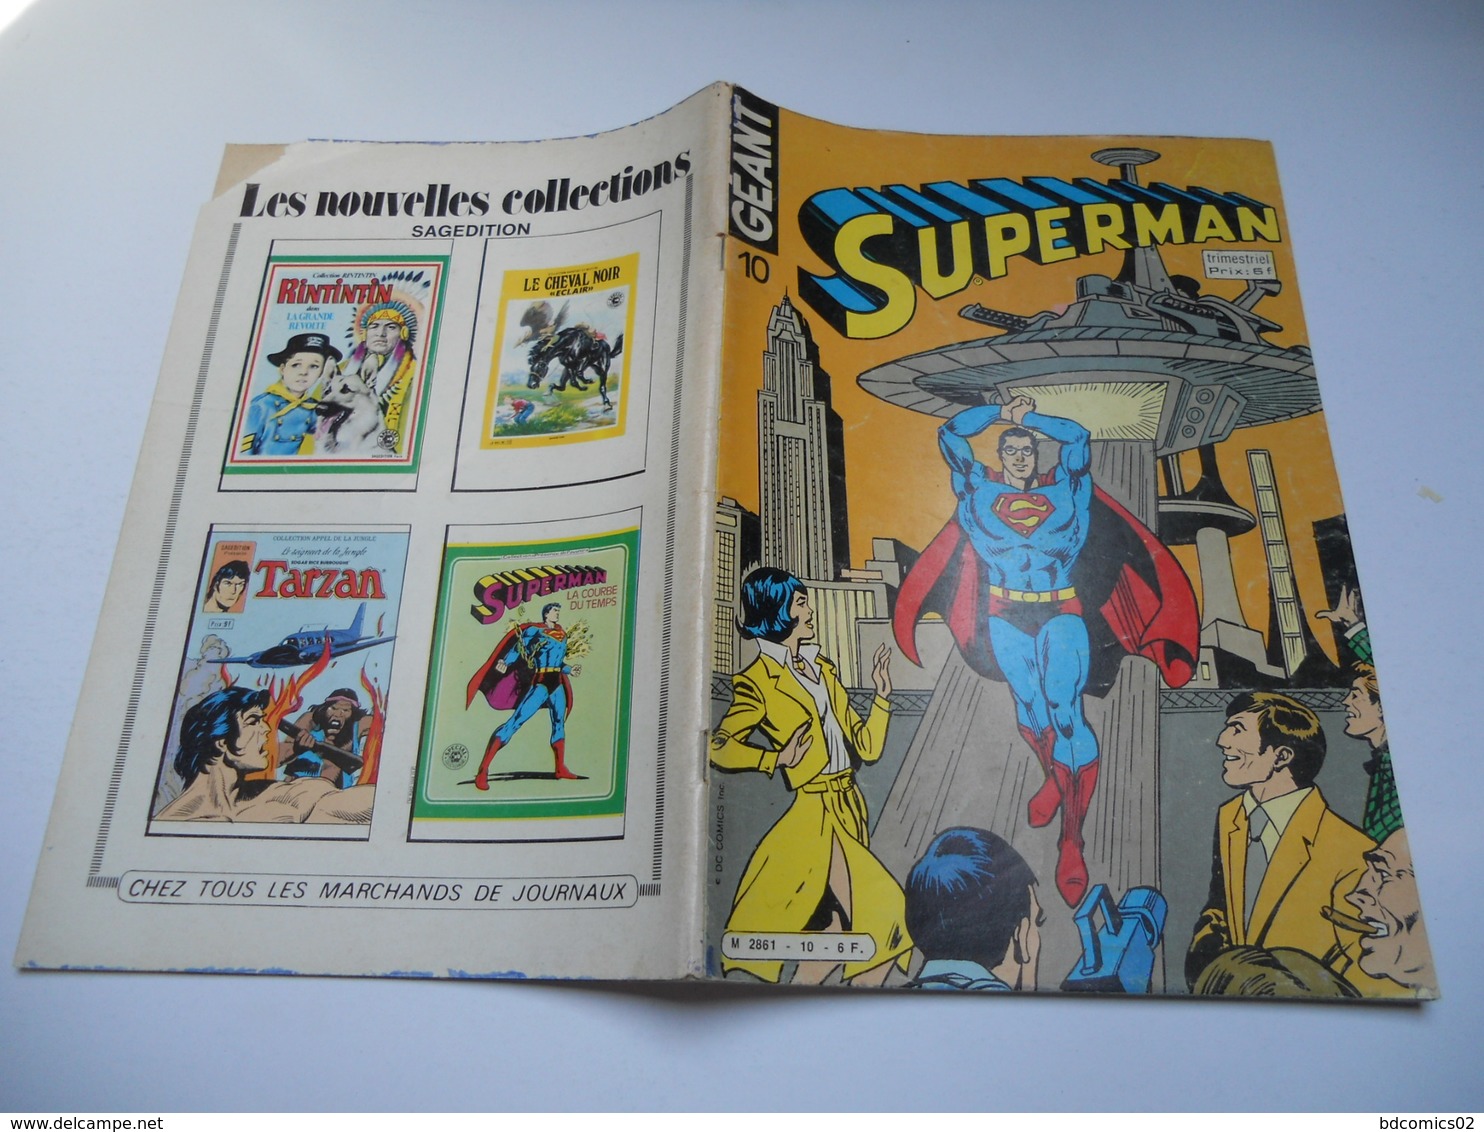 Superman Geant N° 10 LA GRANDE FRAYEUR DE SUPERMAN - Superman